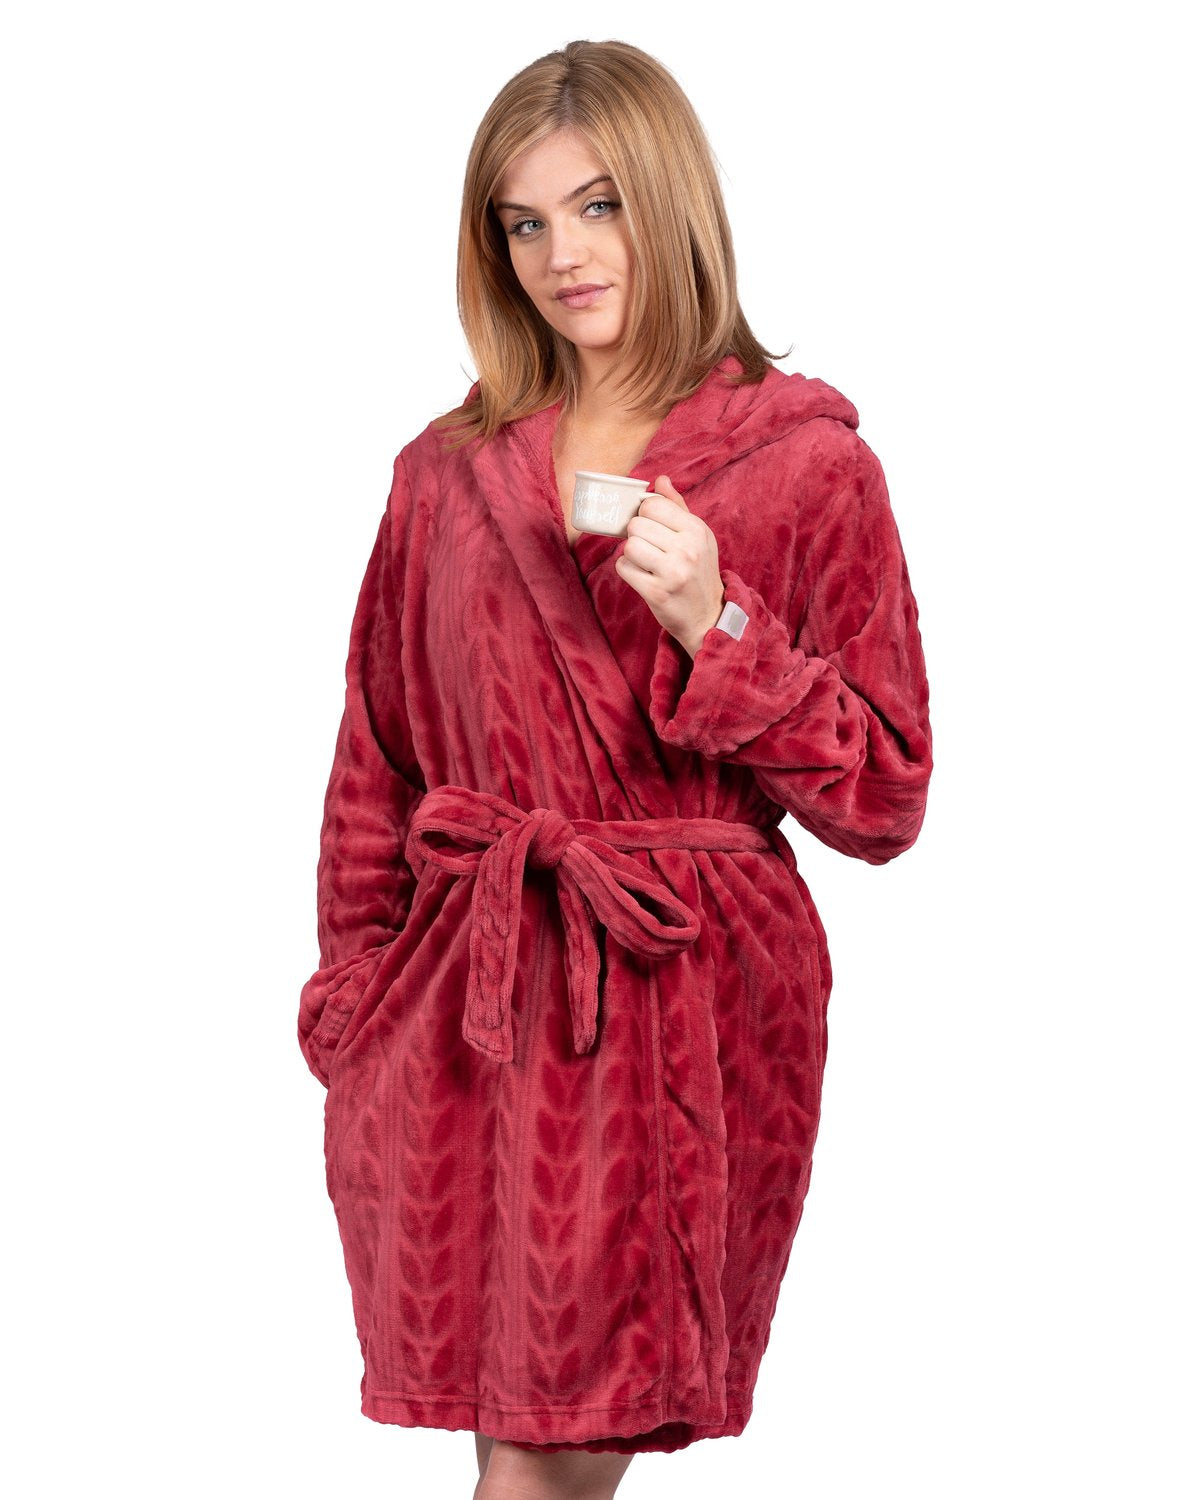 Coffee Shoppe Hooded Plush Robe - Deep Red